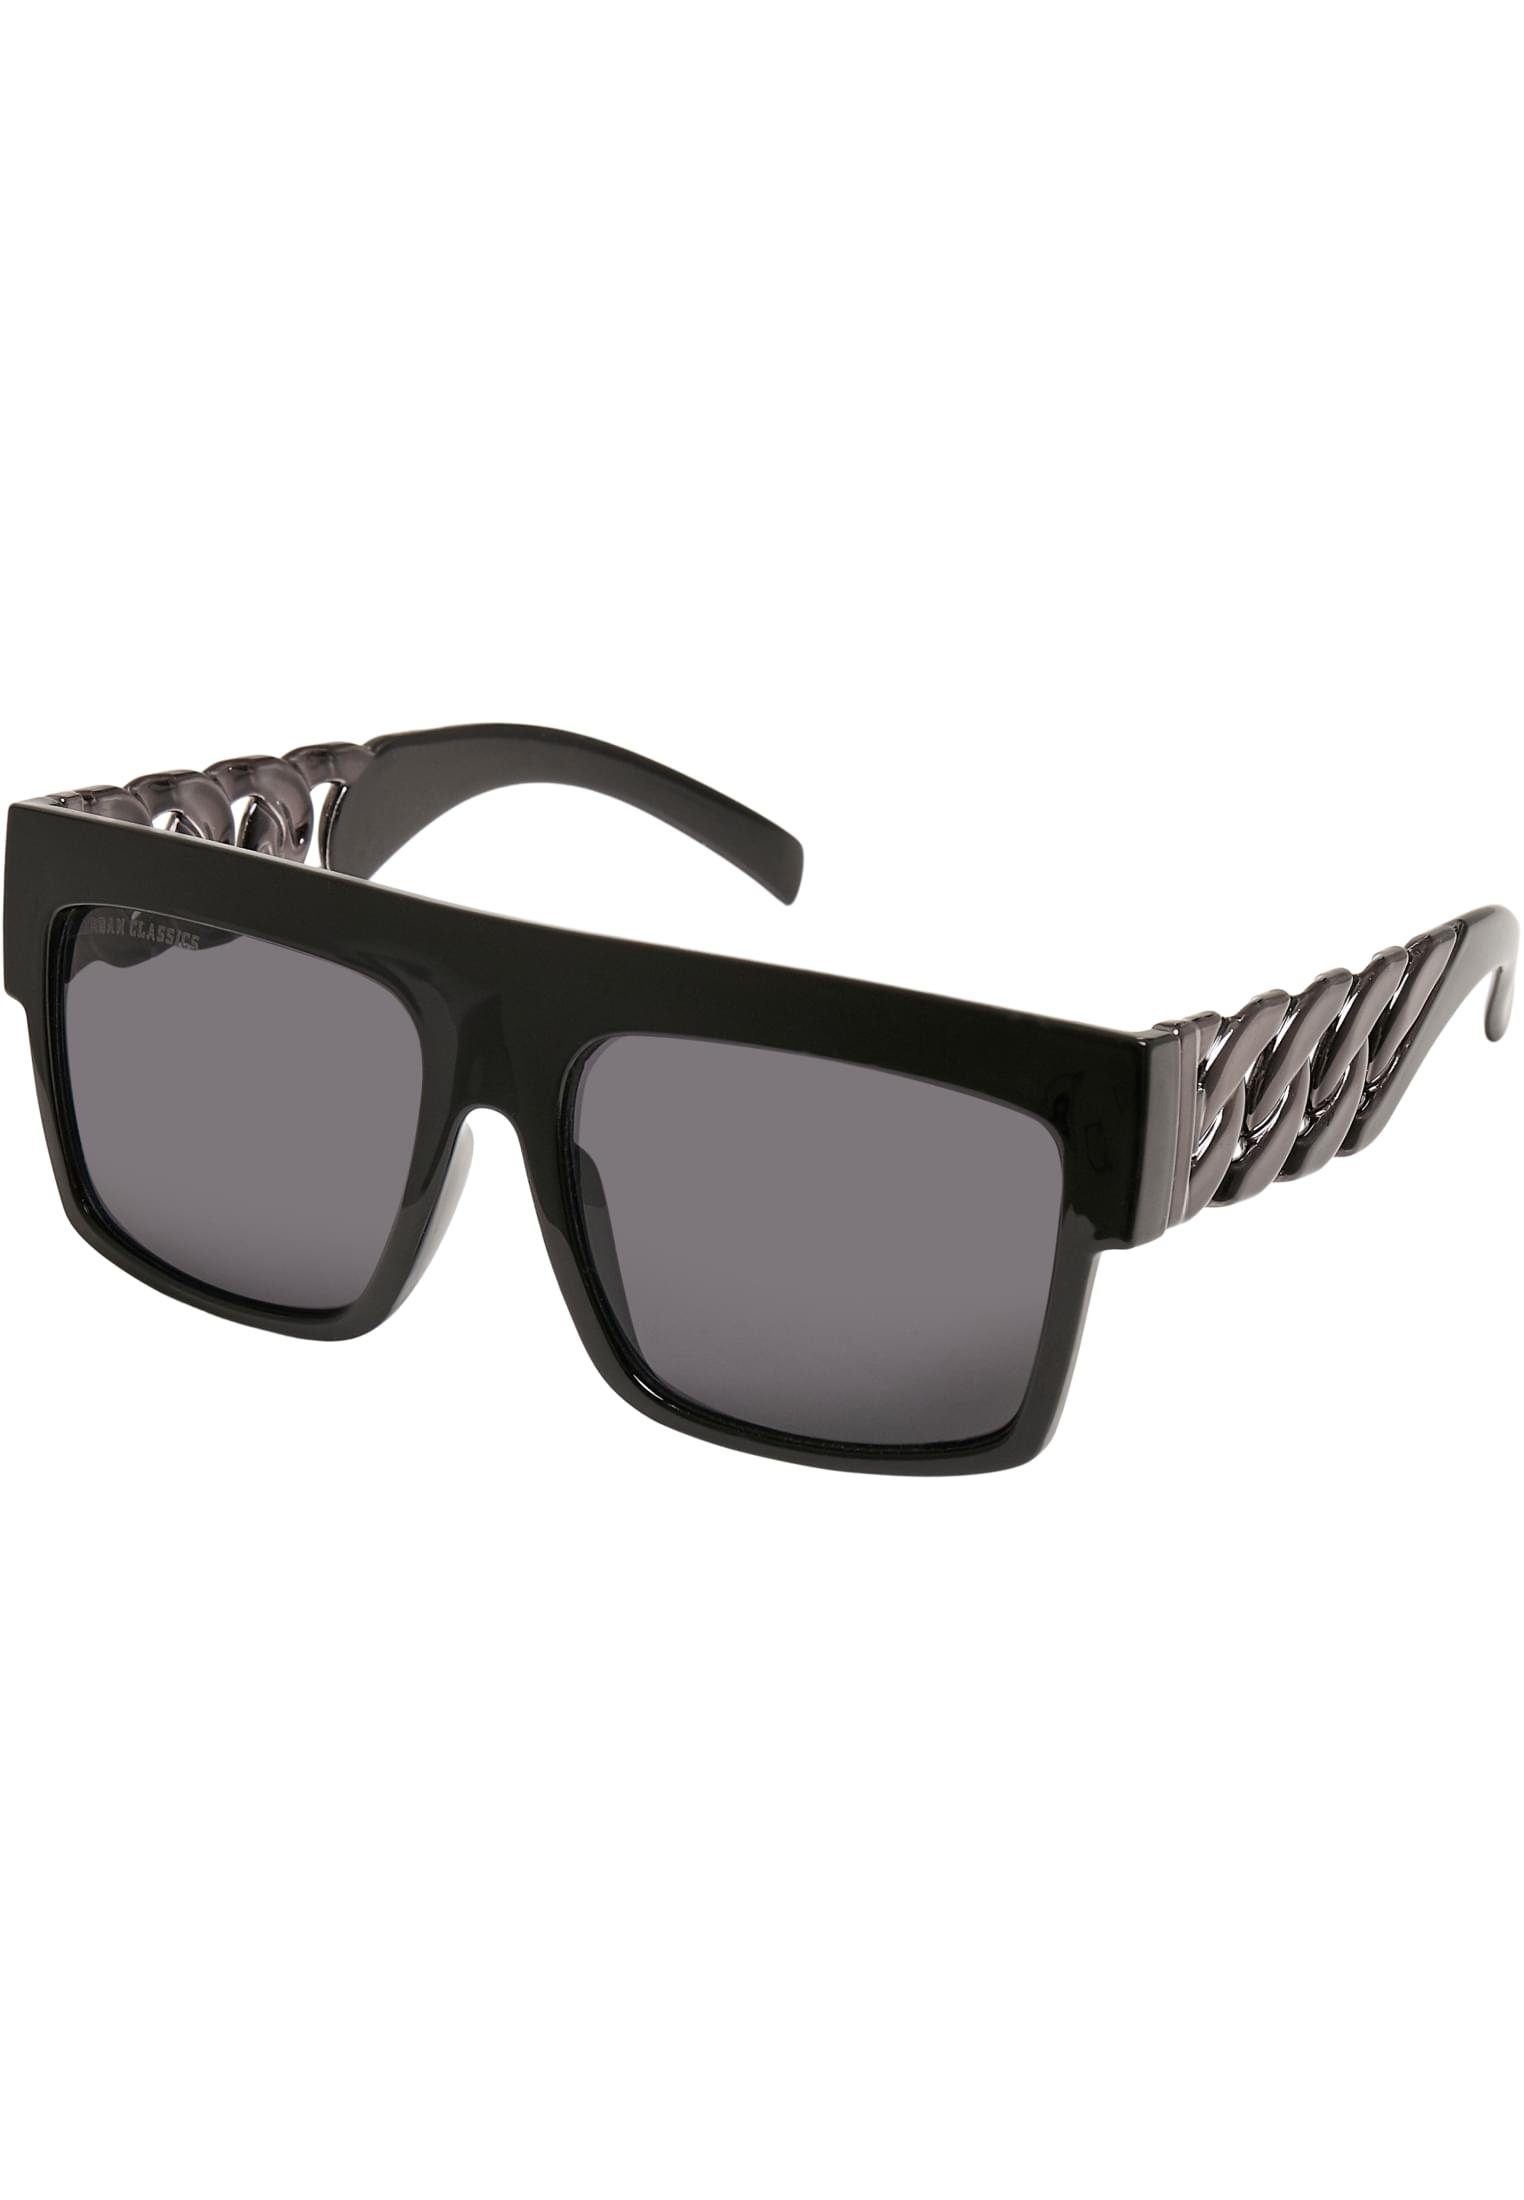 URBAN CLASSICS Sonnenbrille Accessoires Sunglasses Zakynthos with Chain black/silver